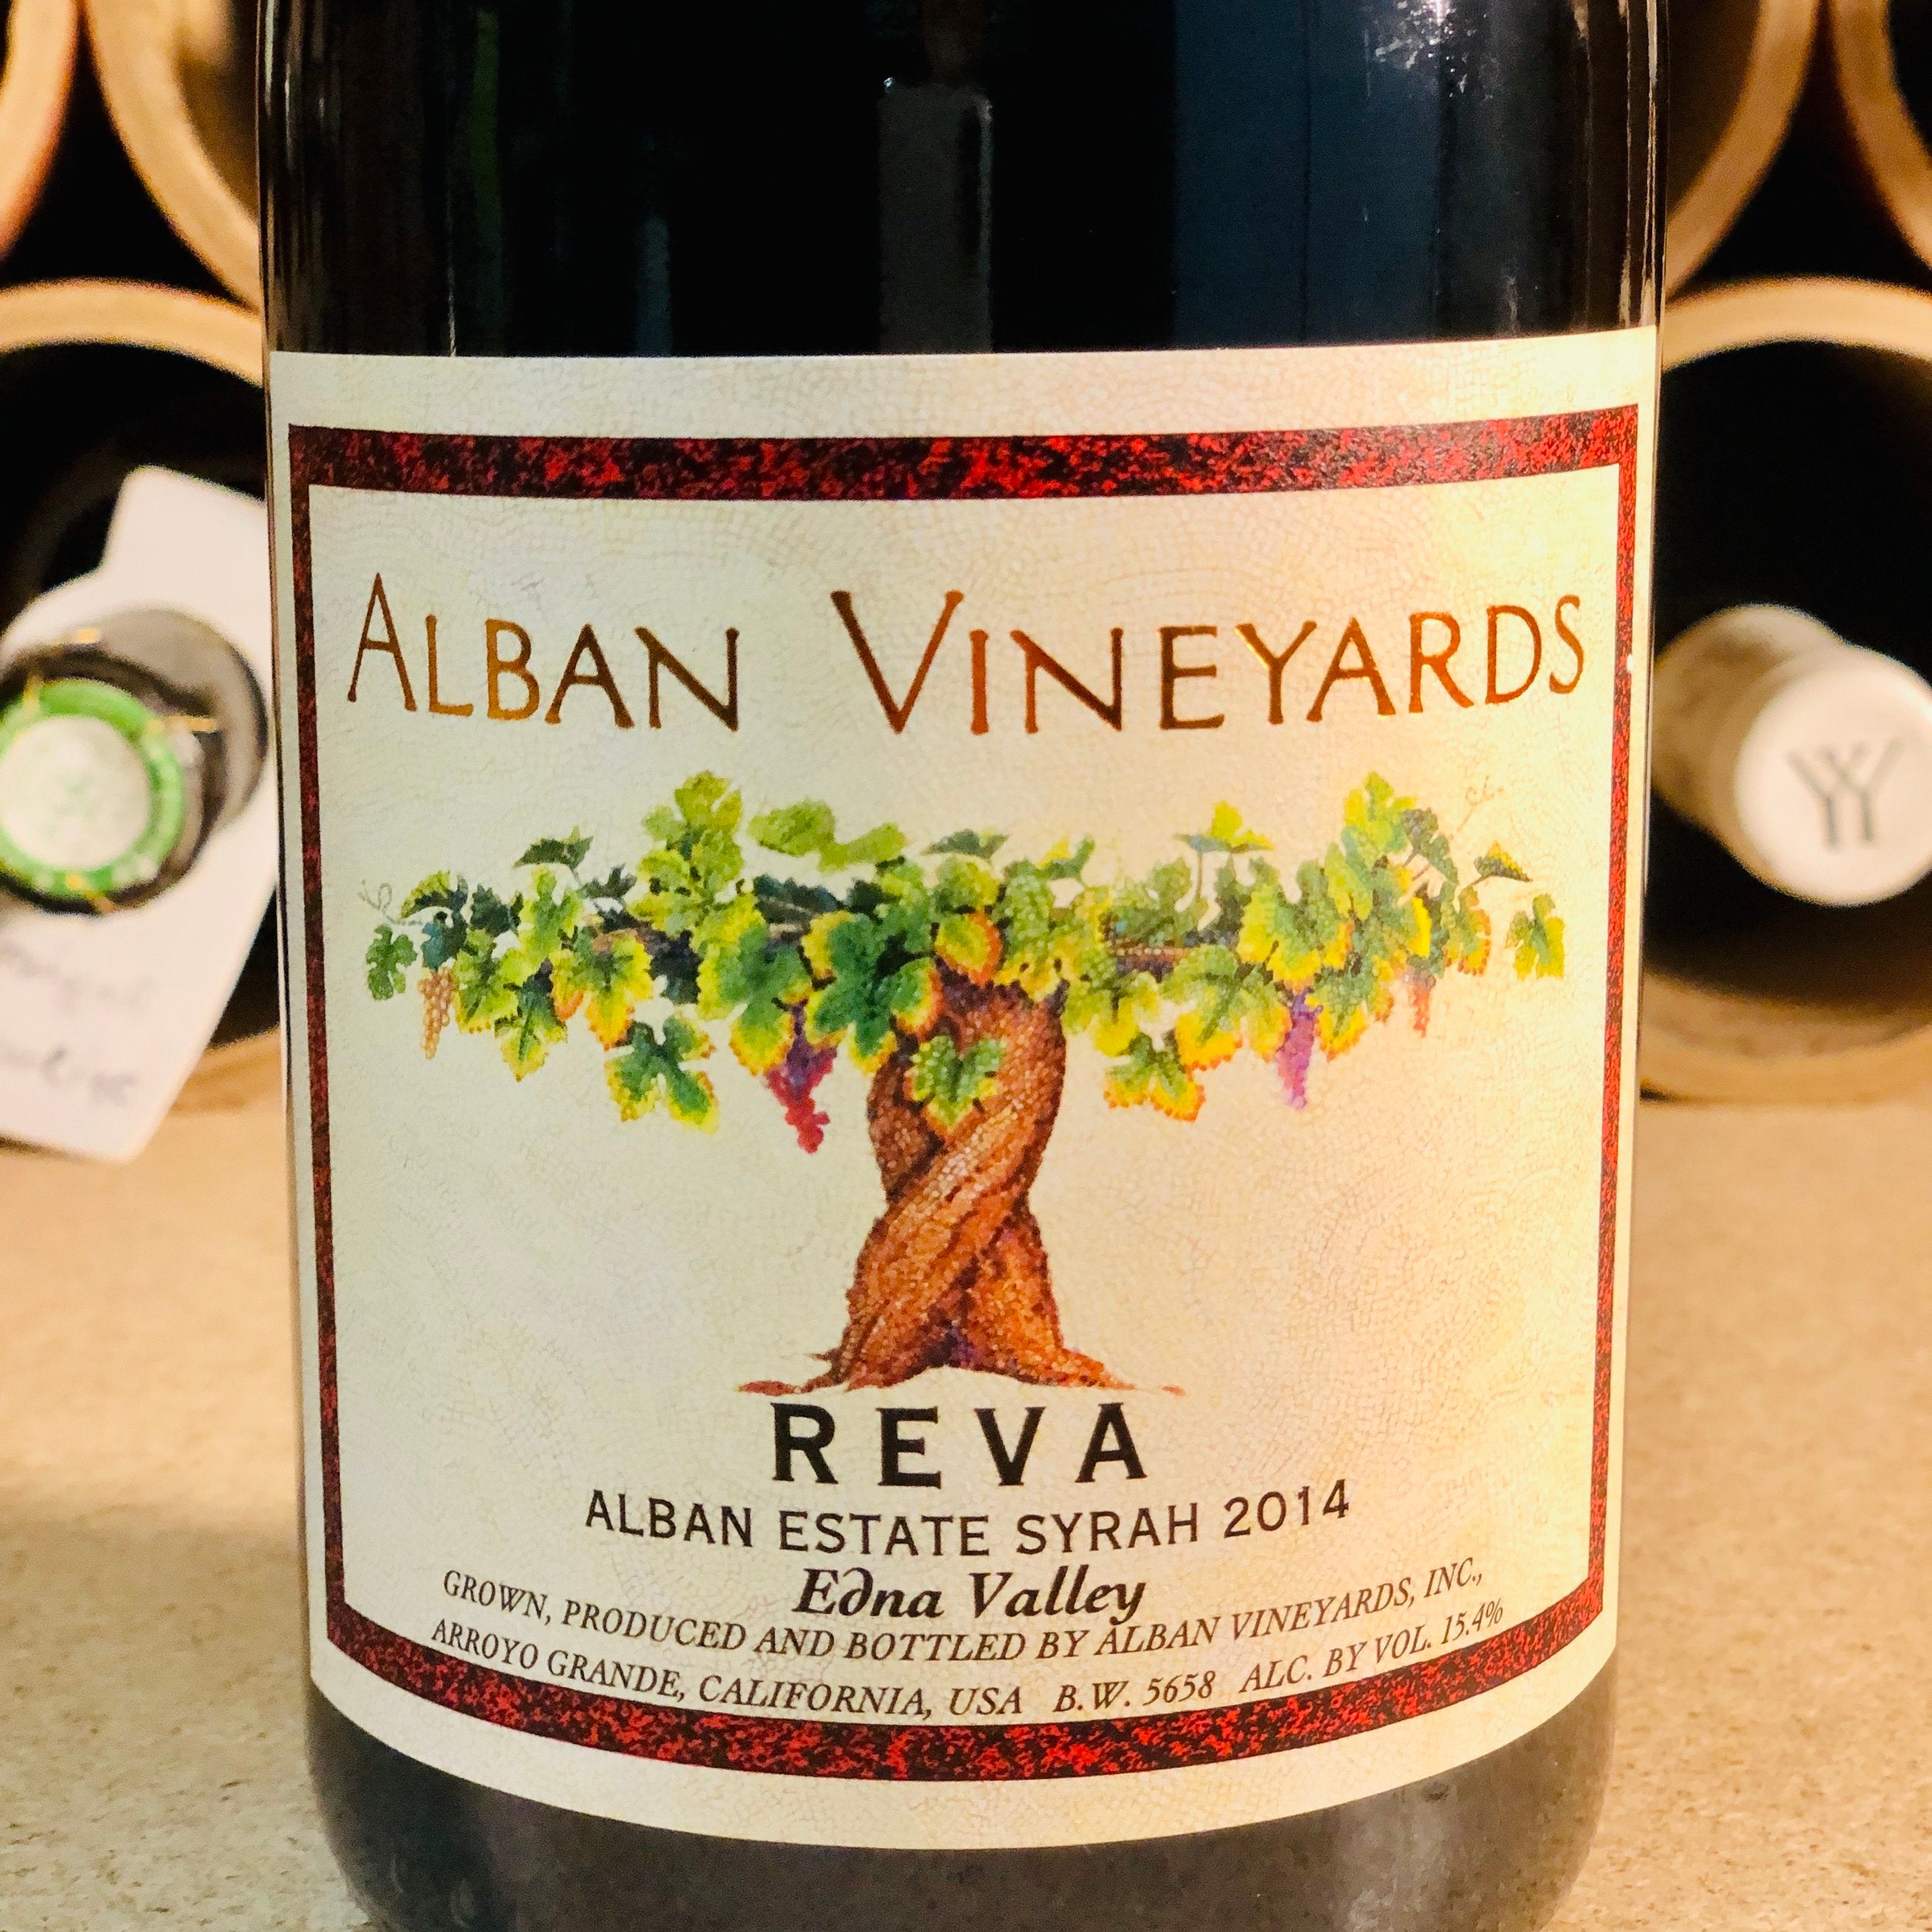 Alban Vineyards, Edna Valley, Reva, Estate Syrah 2014